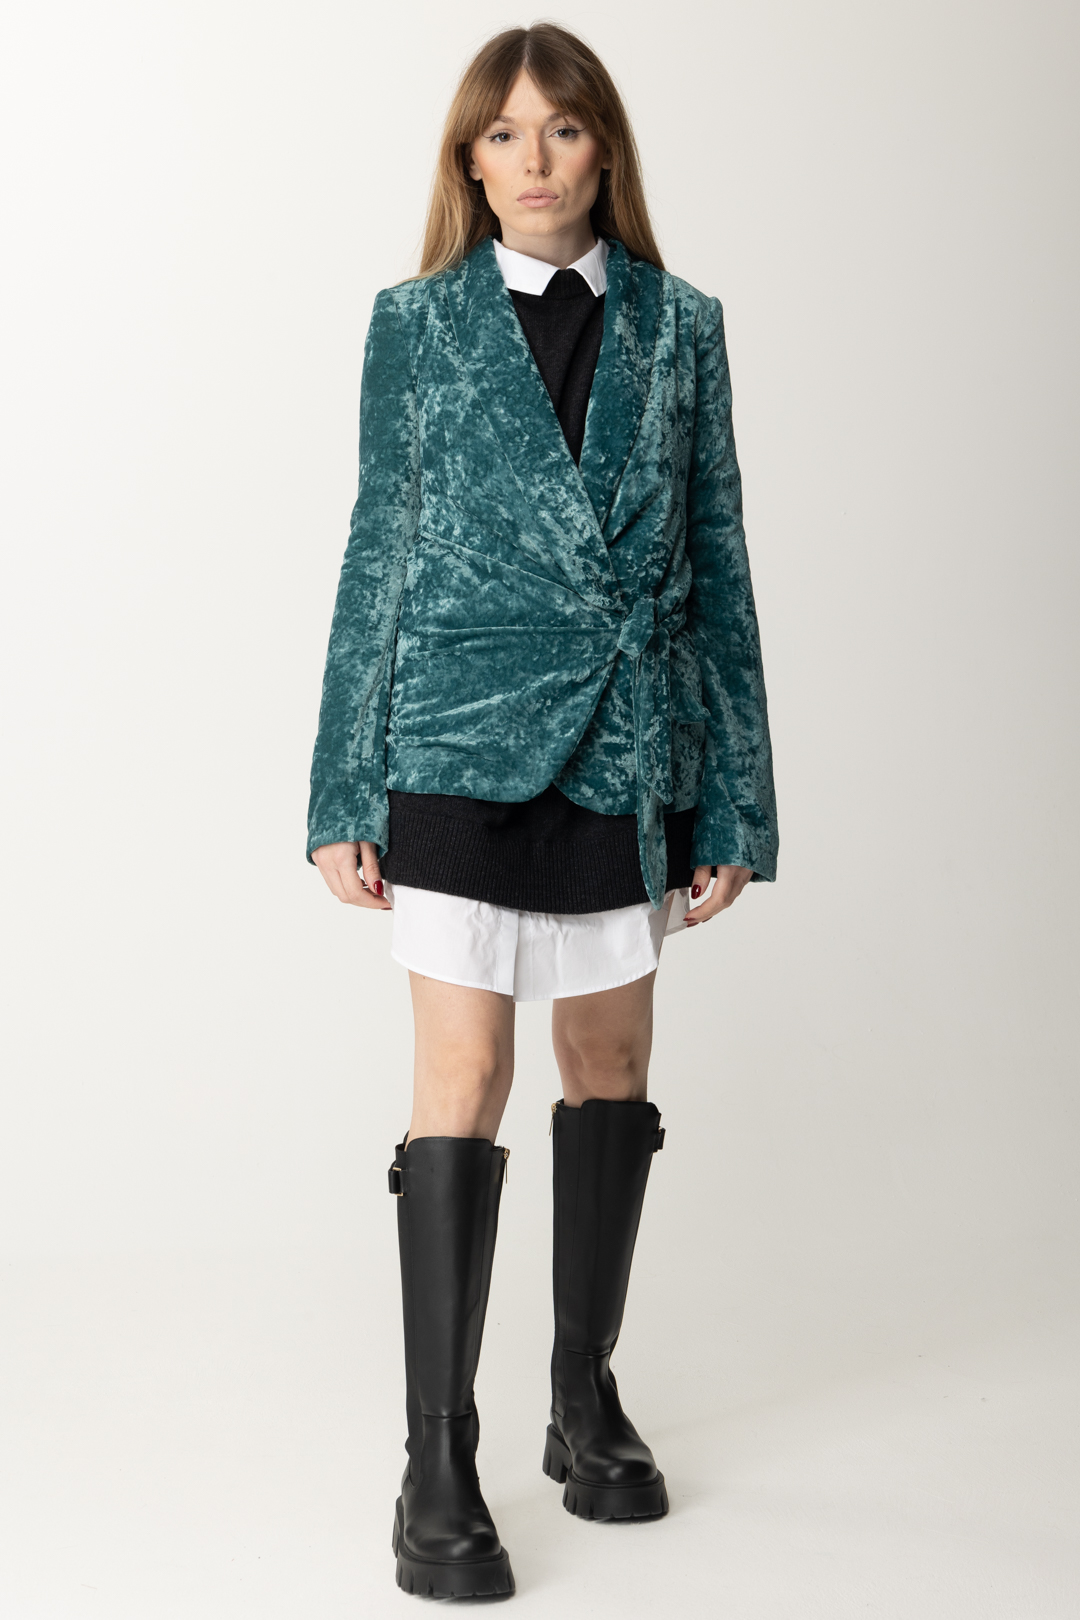 Preview: Aniye By Zira velvet jacket with bow fastening BLU SERPENT